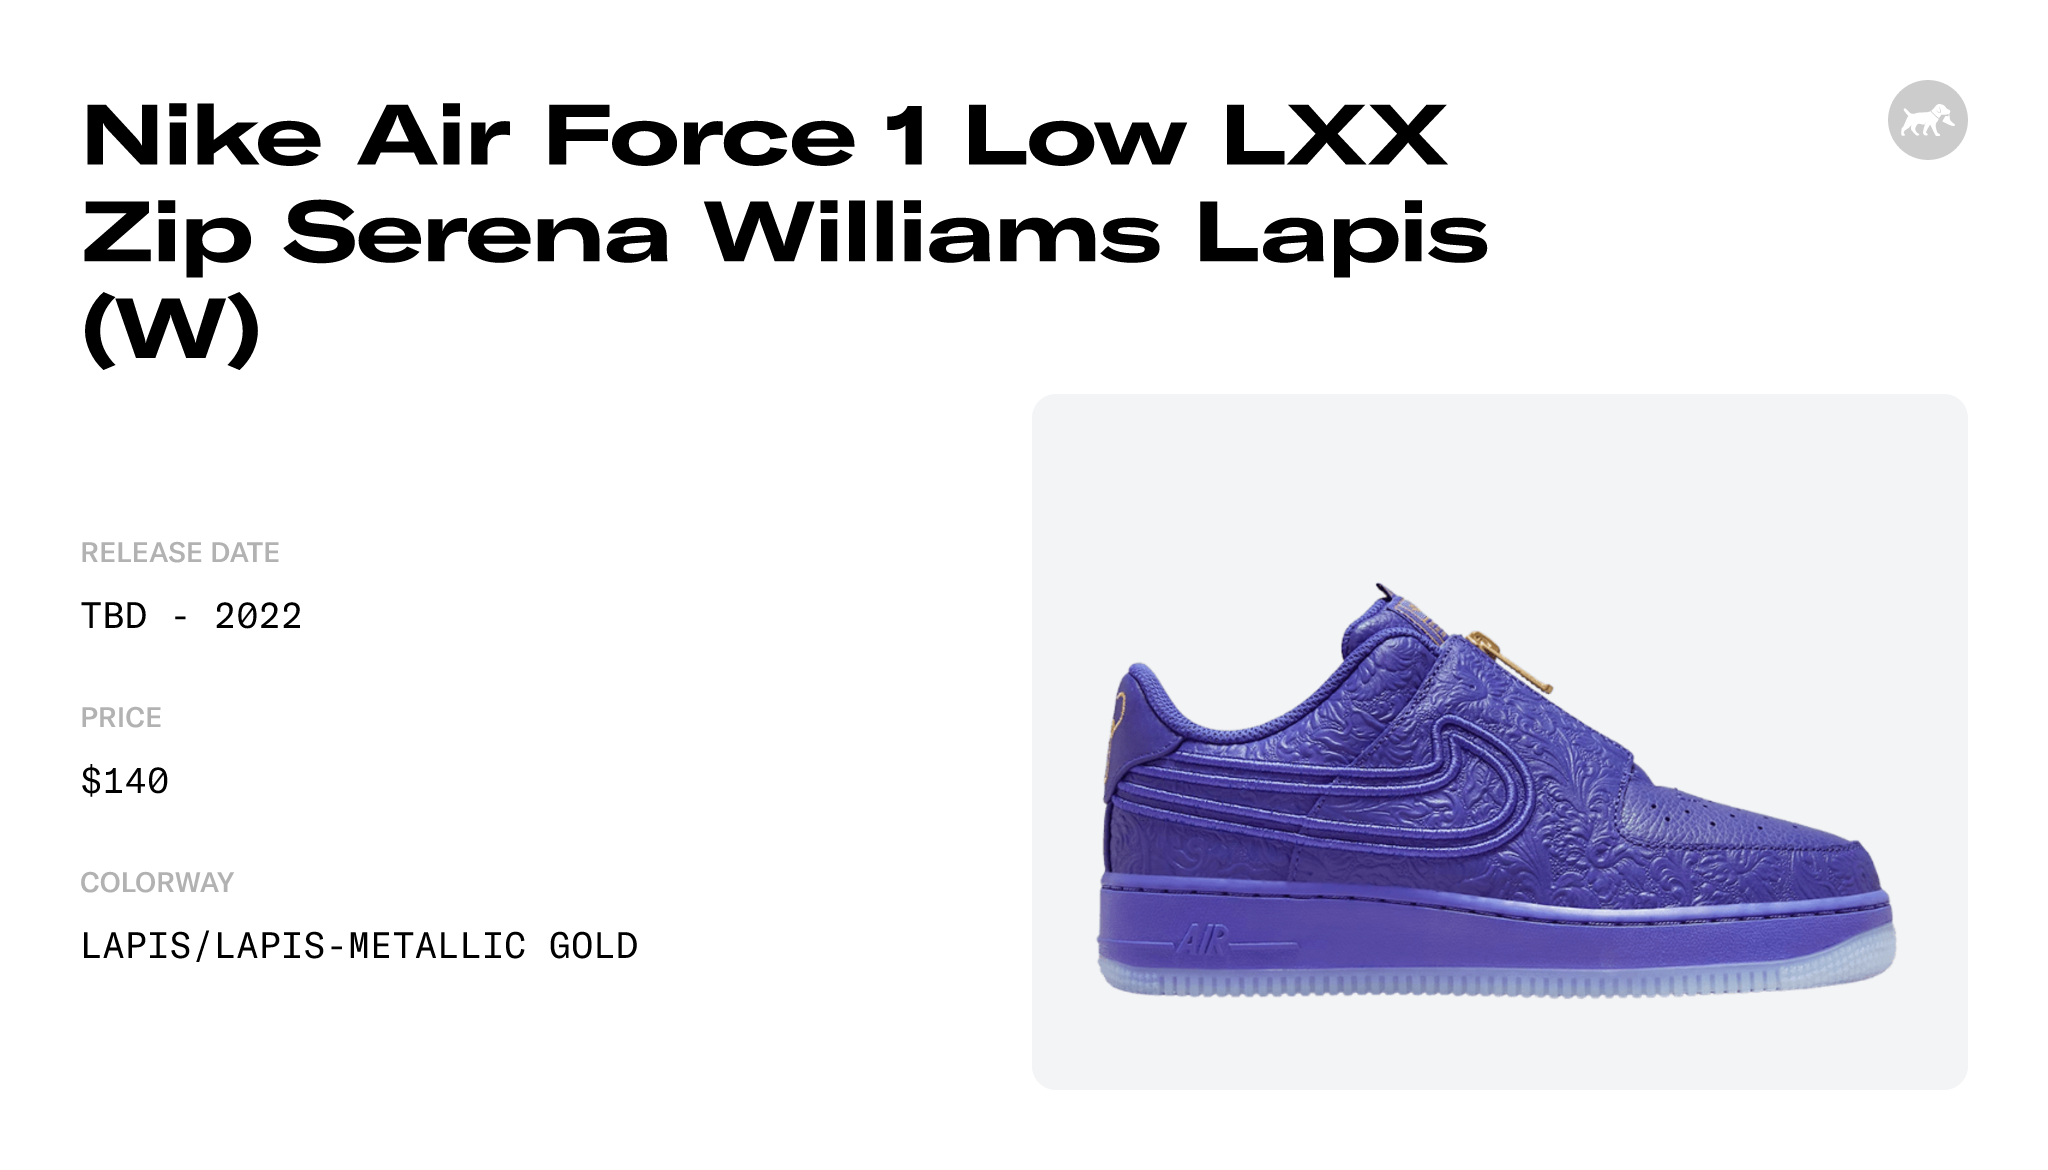 Nike Air Force 1 Low LXX Zip Serena Williams Lapis (Women's